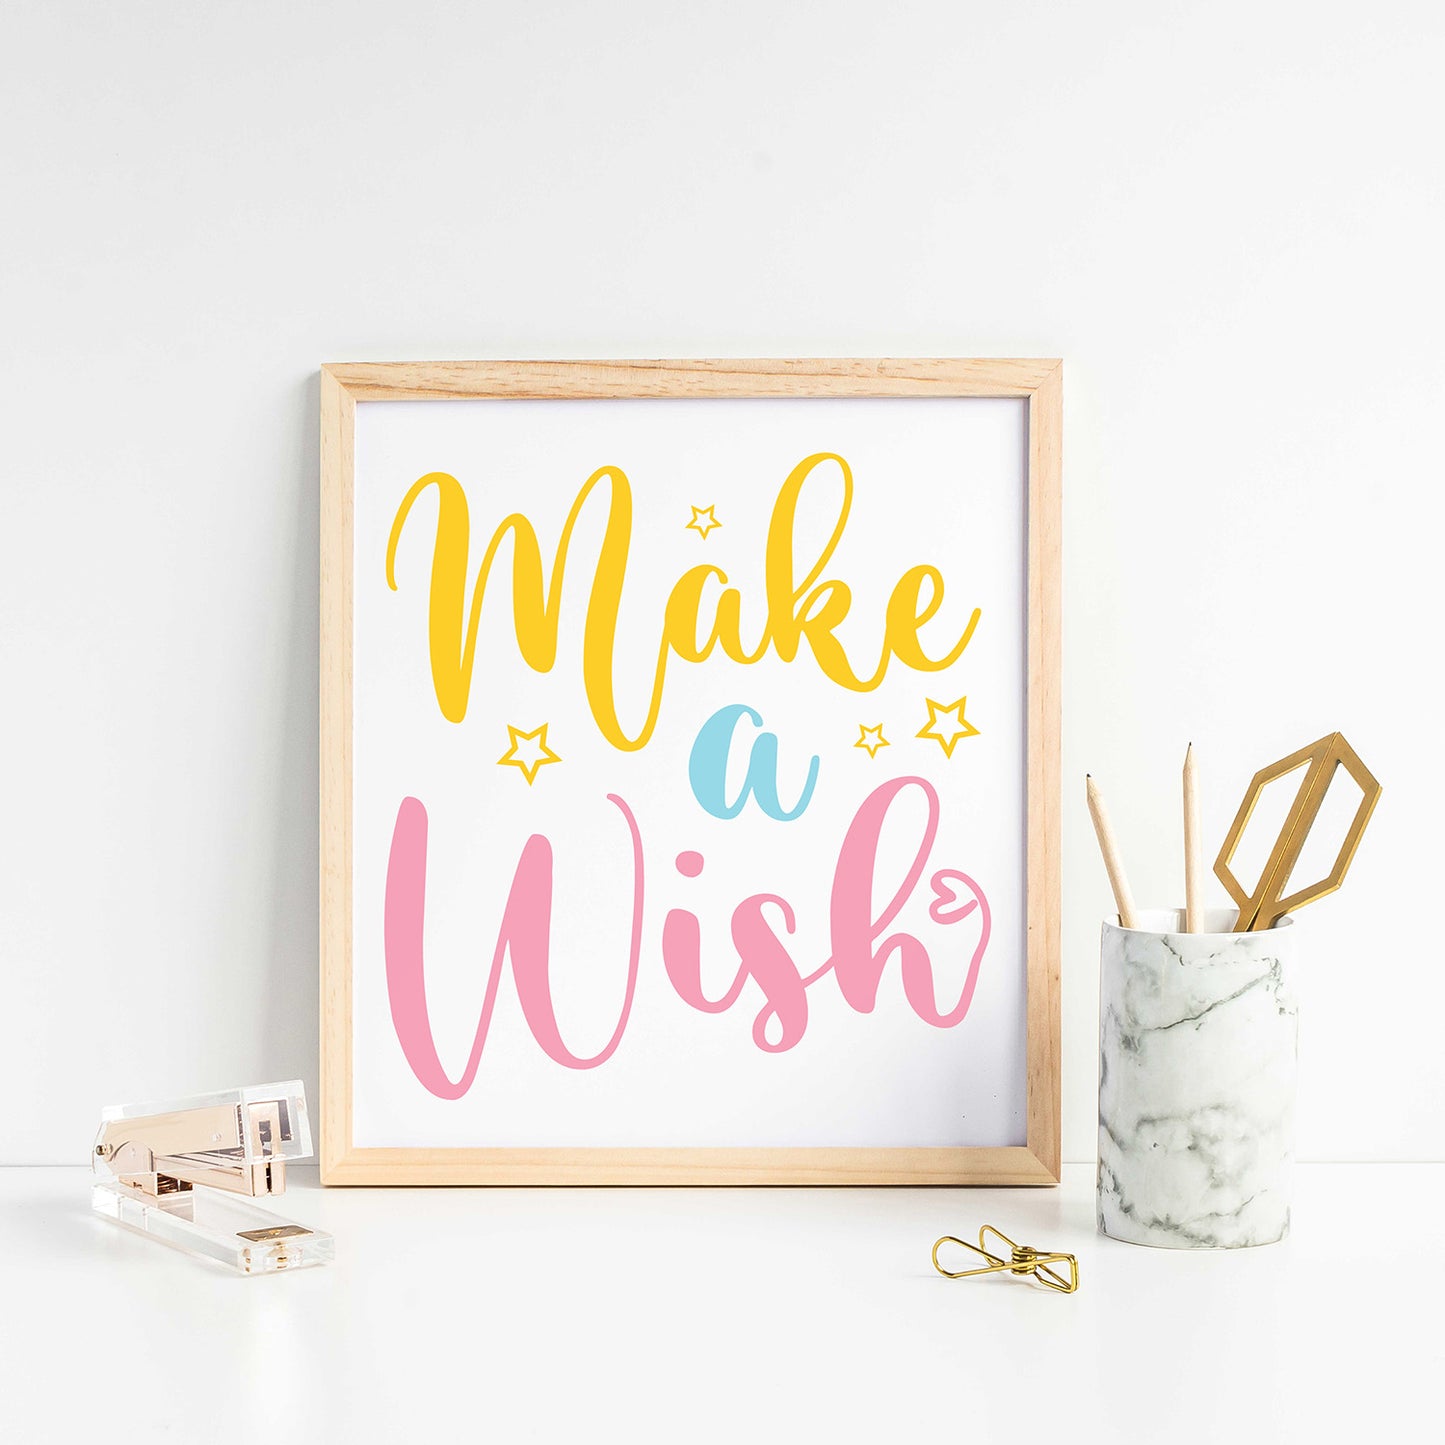 "Make a Wish" Graphic